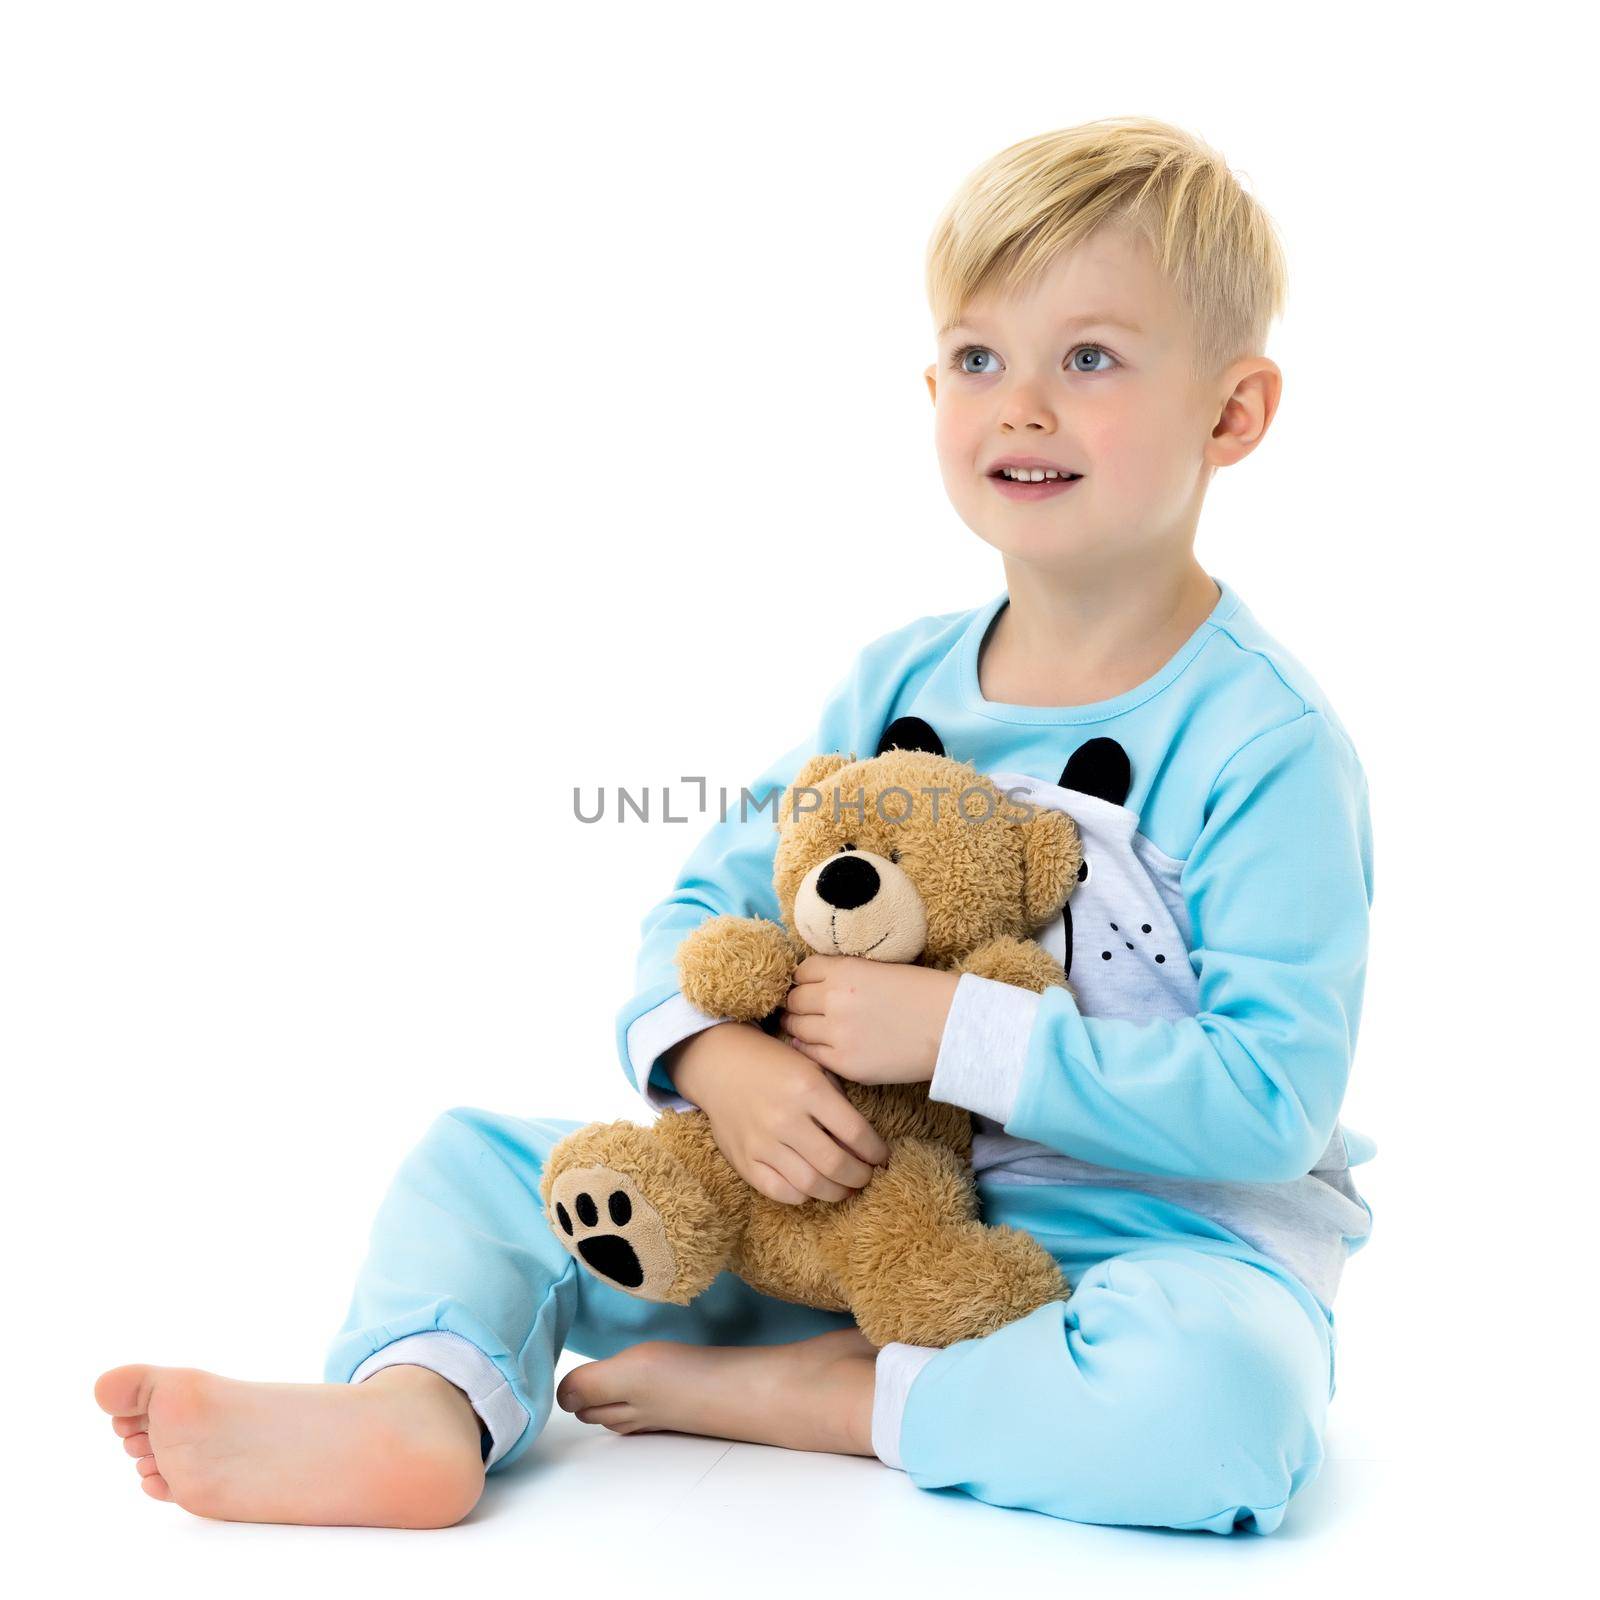 Little boy in pajamas with a teddy bear. by kolesnikov_studio